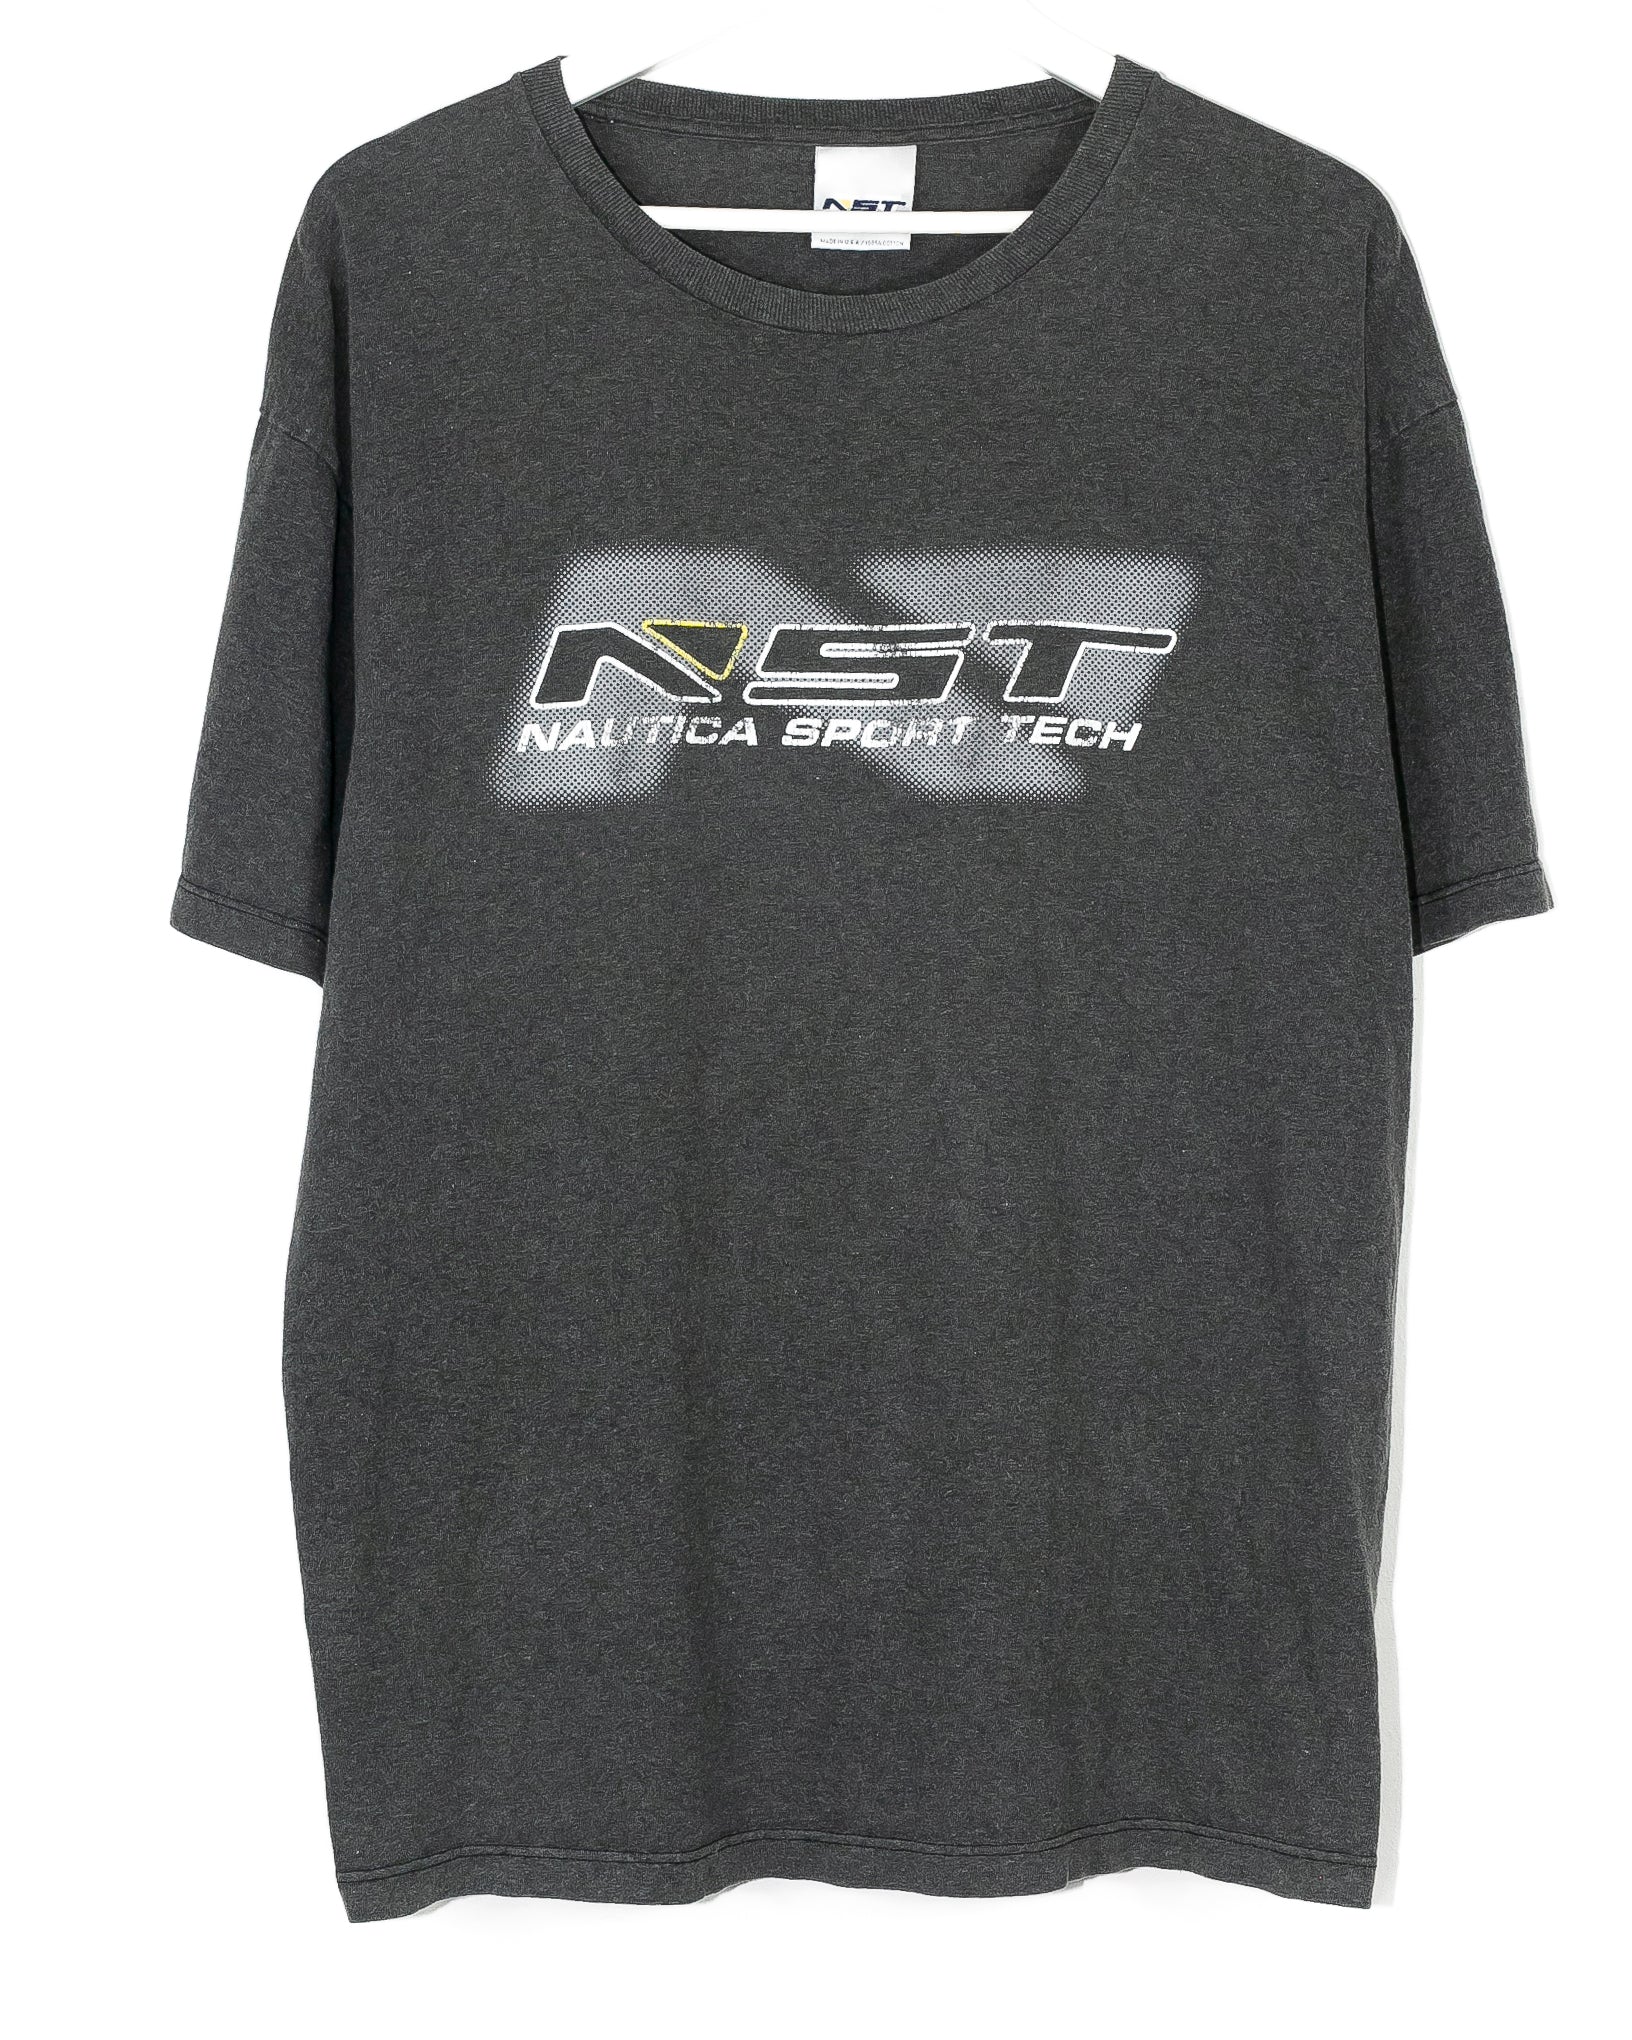 Vintage Nautica Sport T-shirt (L/XL)